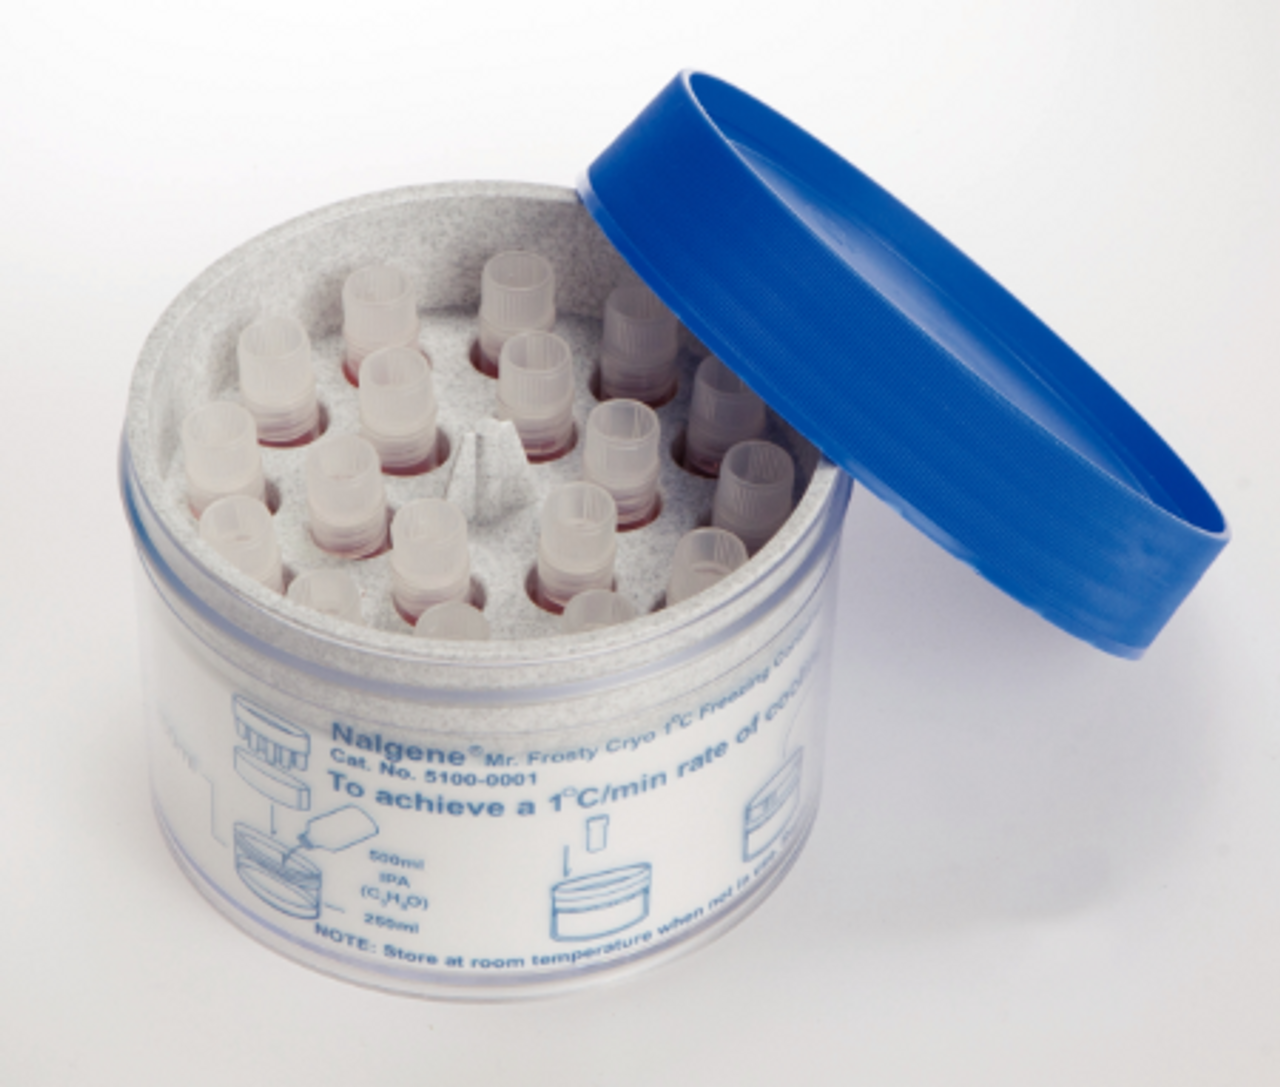 Nalgene® 5100-0001 Mr. Frosty Freezing Container for 1.2-2mL CryoVials,  Polycarbonate